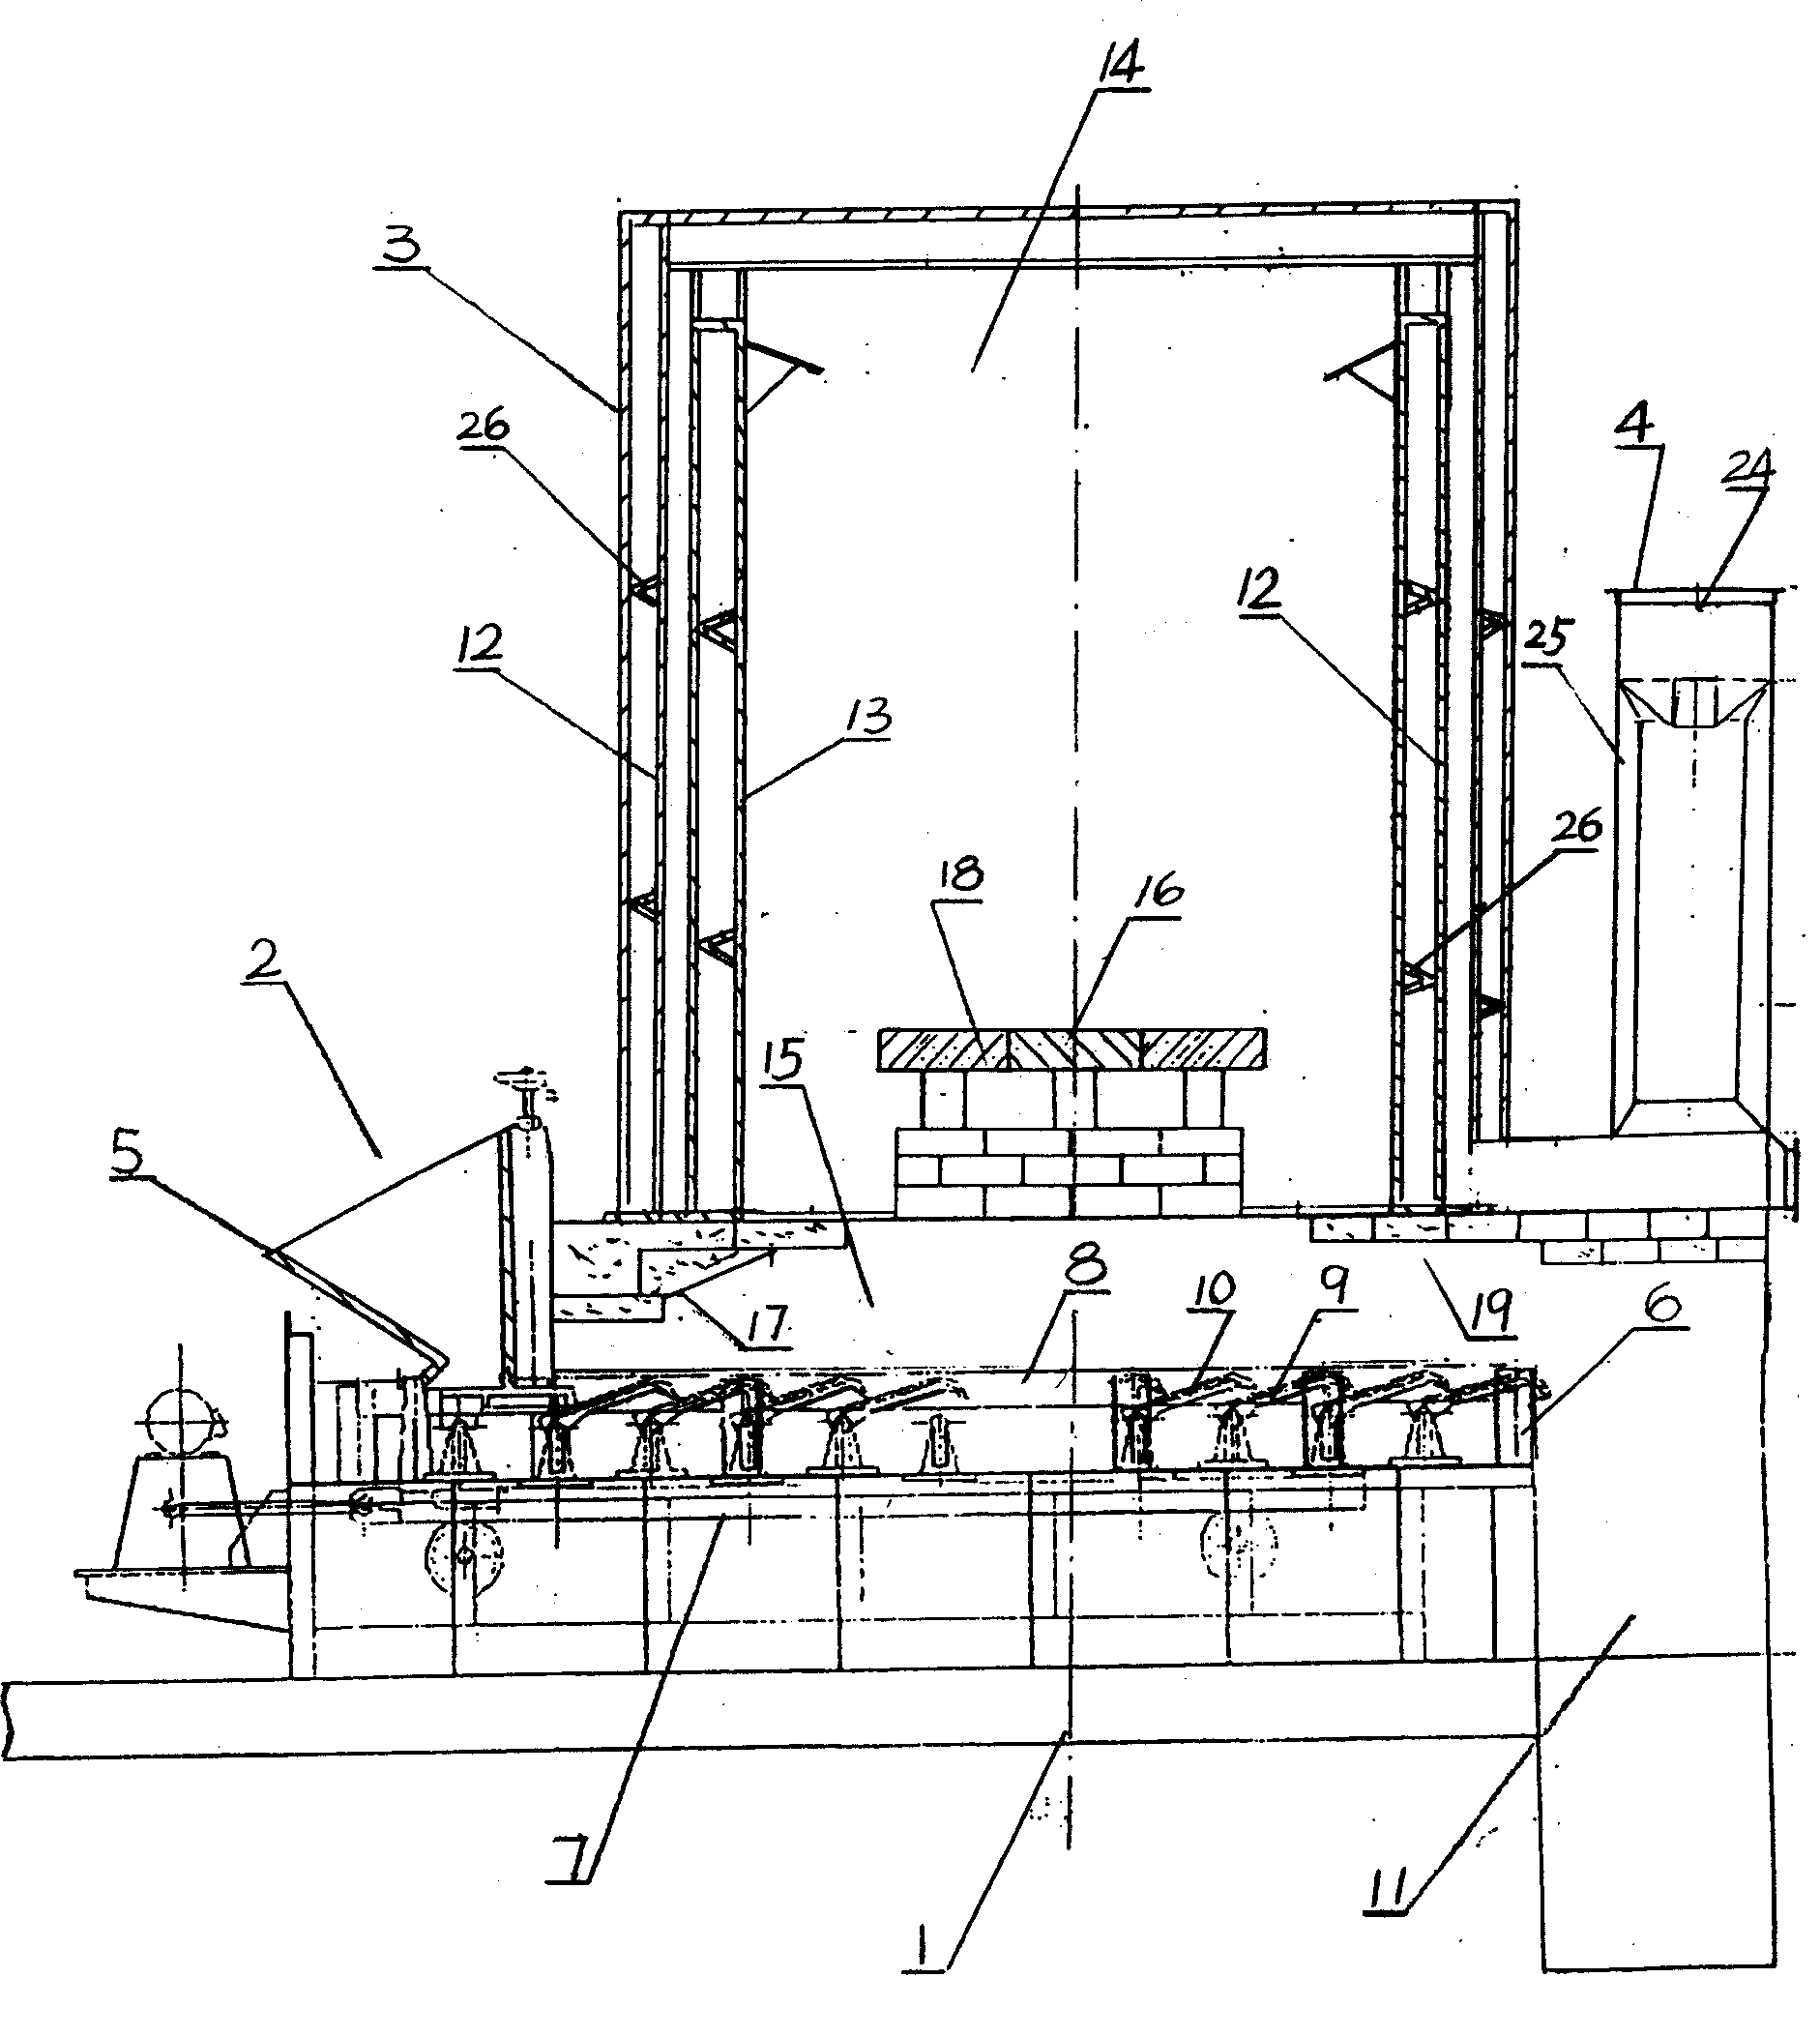 Coal burning hot air furnace with horizontal-reciprocating grate